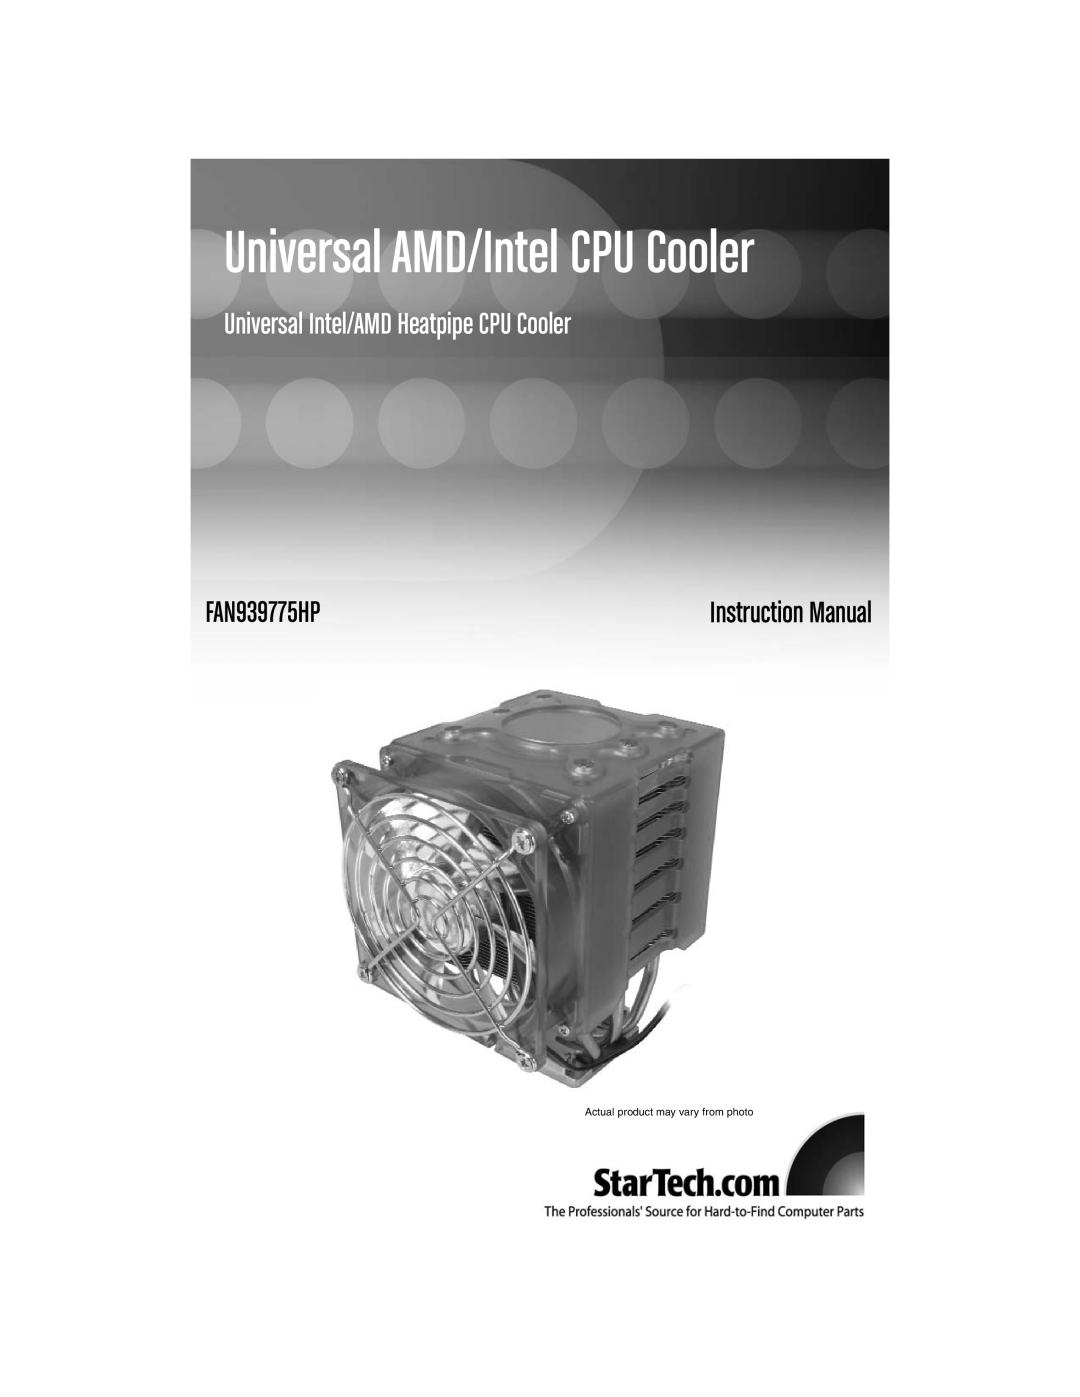 StarTech.com FAN939775HP instruction manual Universal AMD/Intel CPU Cooler, Universal Intel/AMD Heatpipe CPU Cooler 